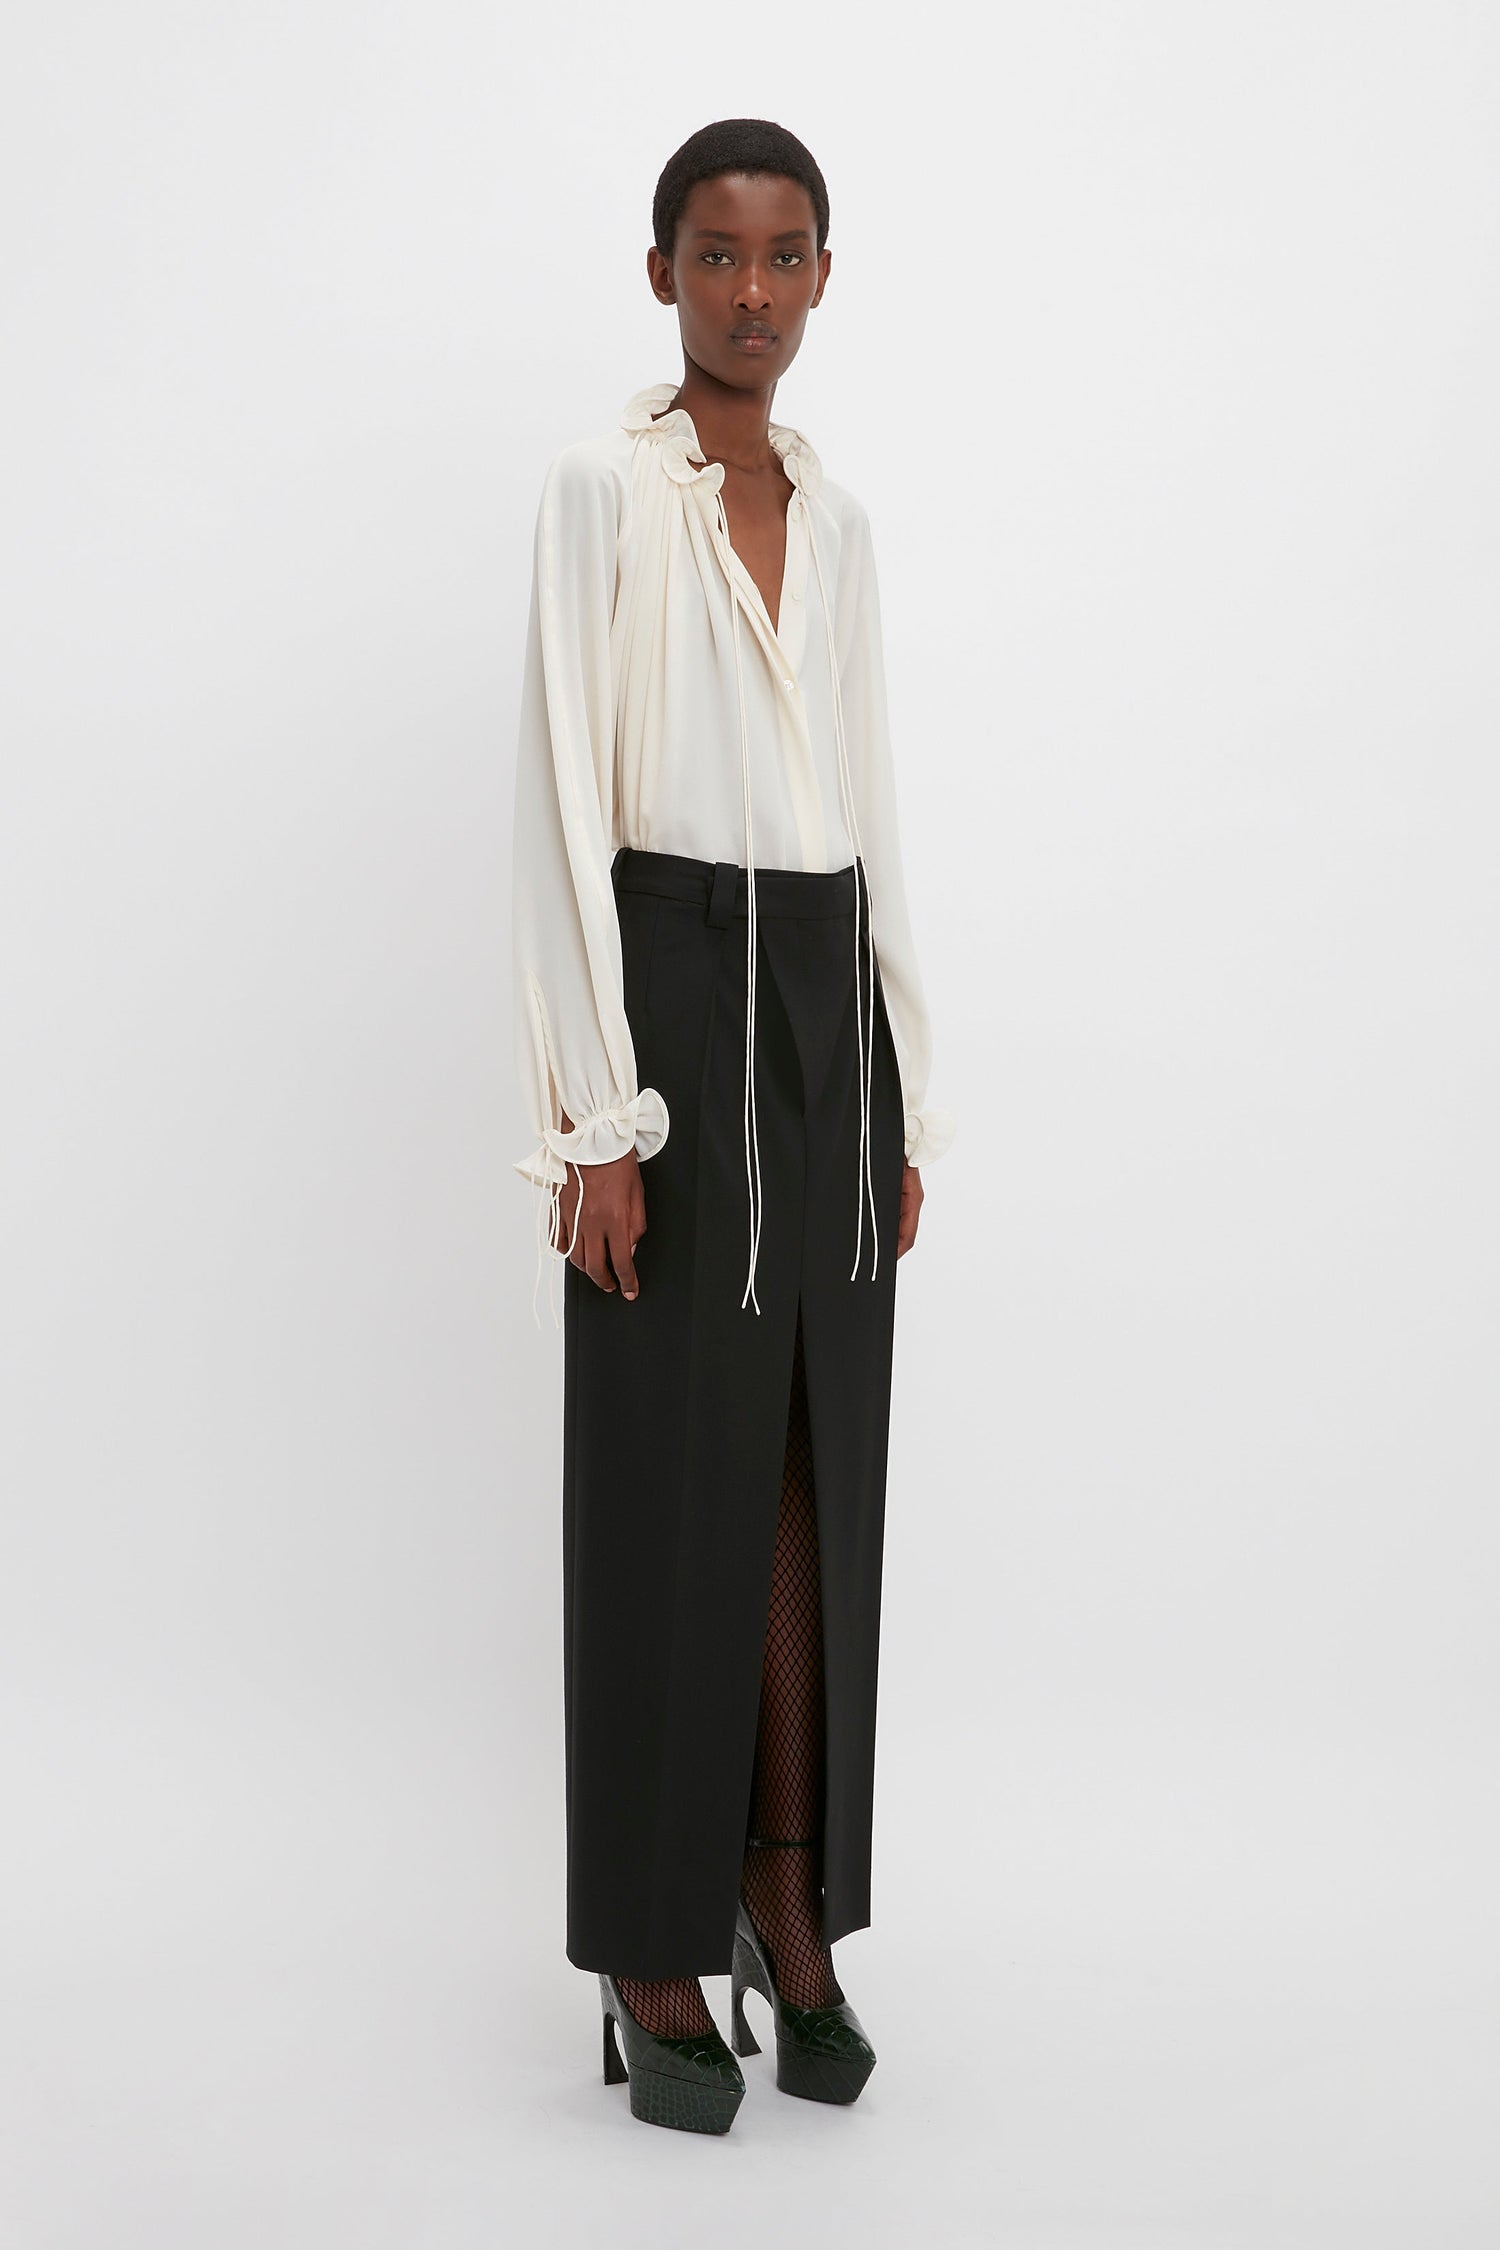 Victoria Beckham | Wrap Front Tailored Skirt - Black